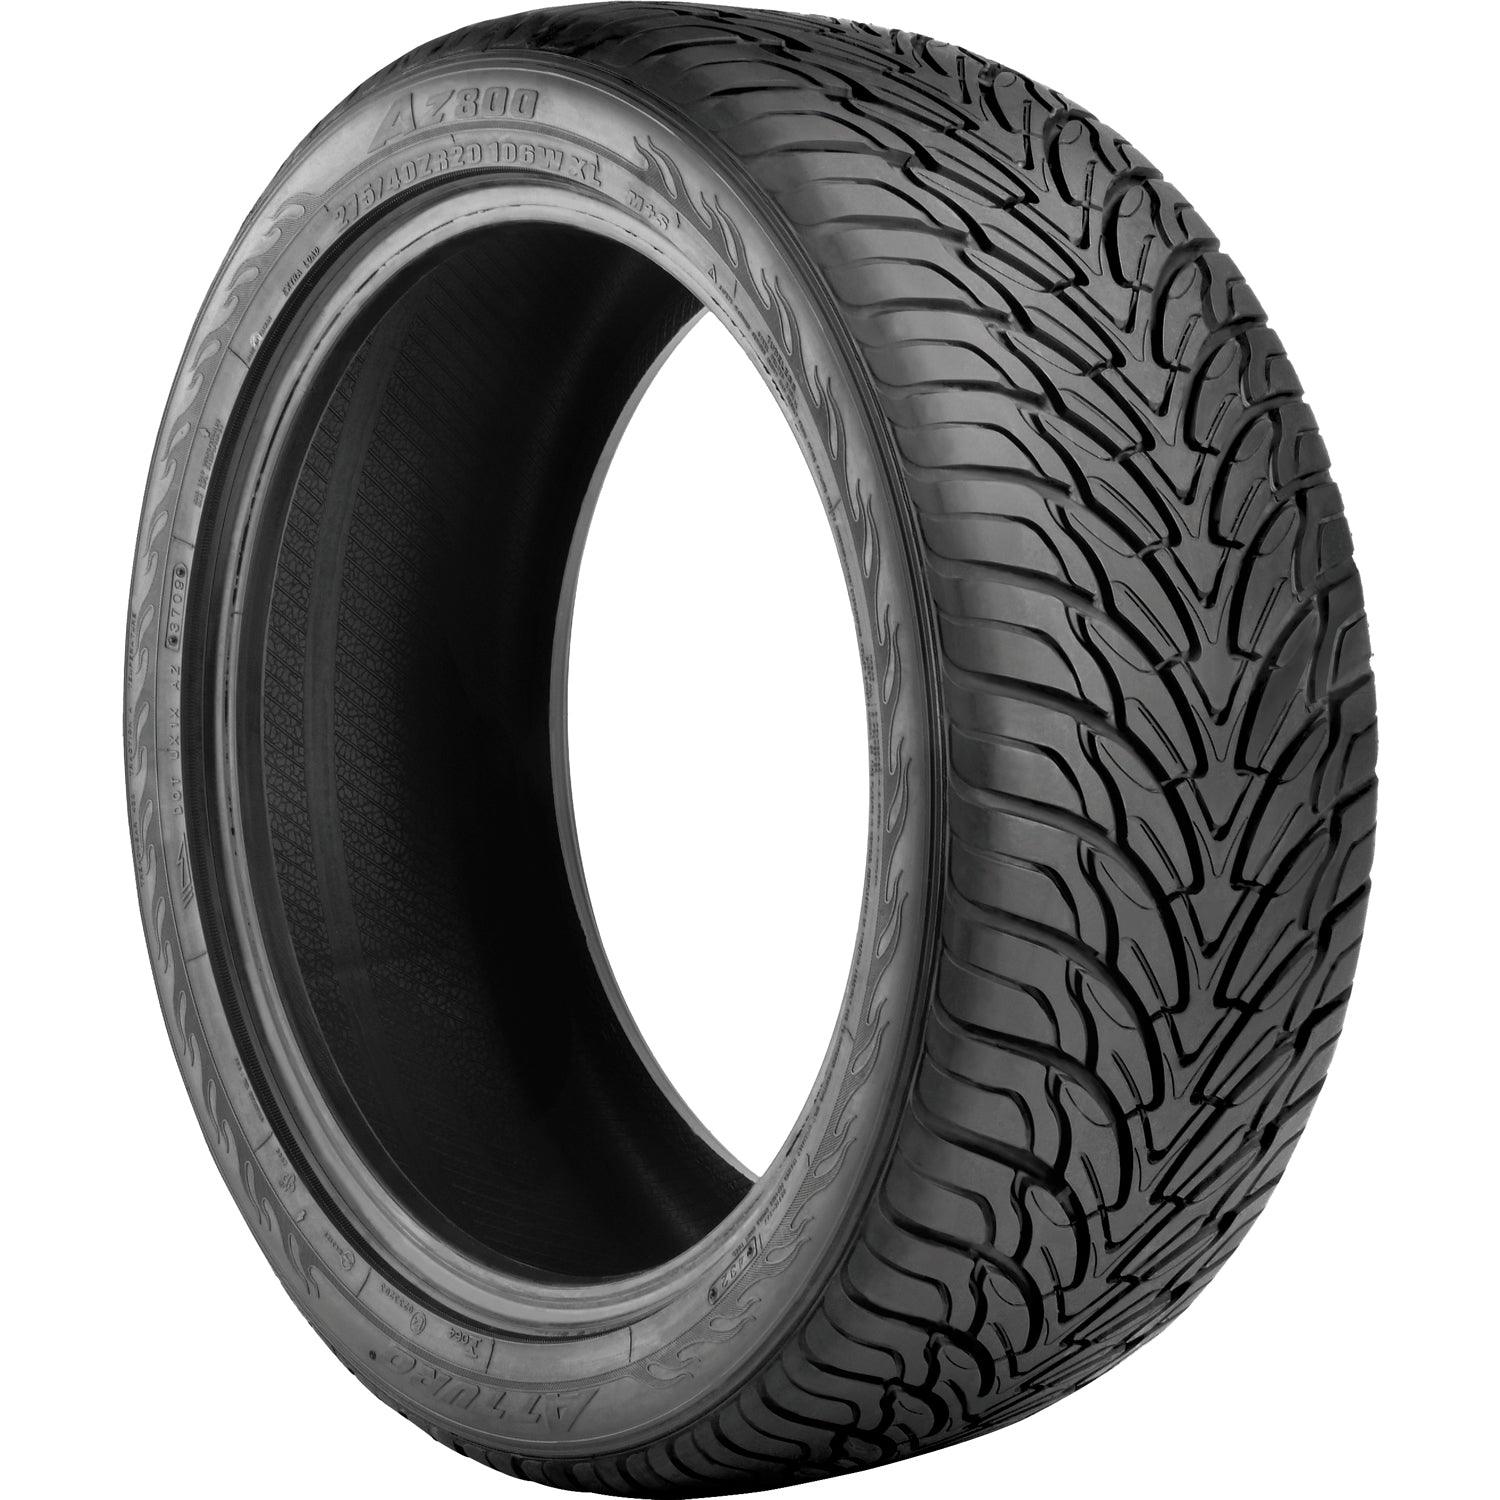 ATTURO AZ800 295/40R20 (29.5X11.8R 20) Tires